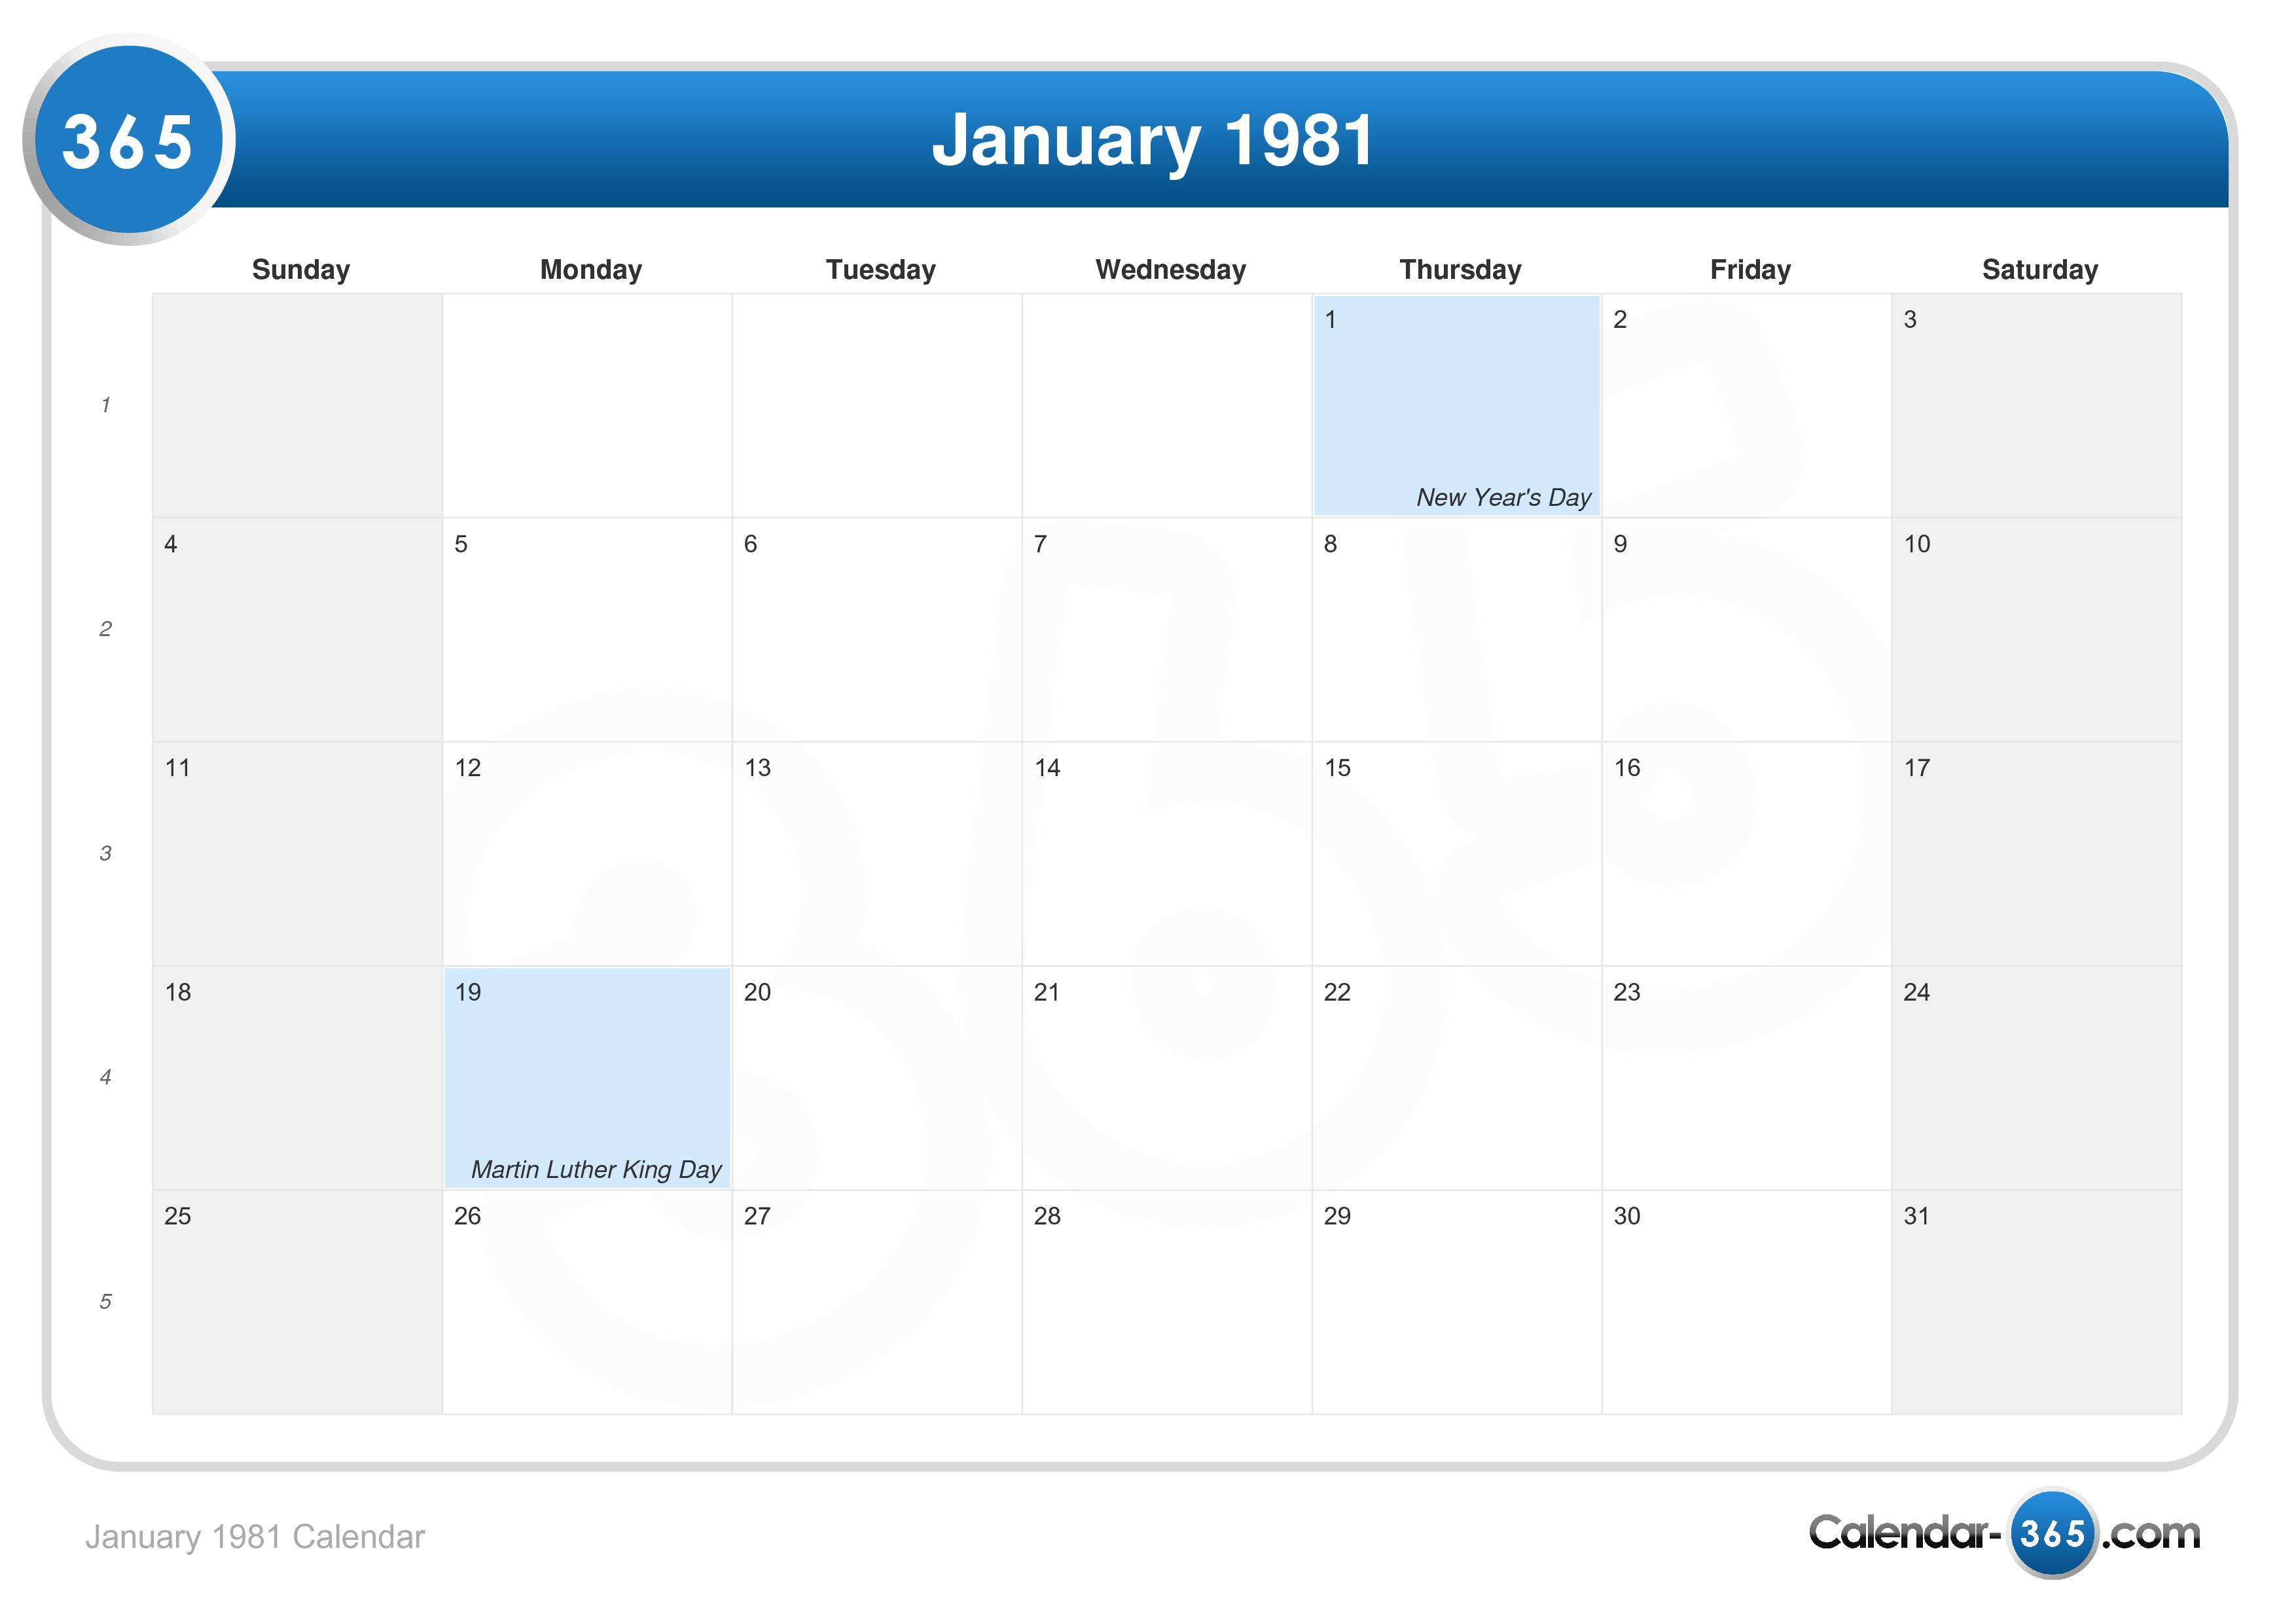 January 1981 Calendar